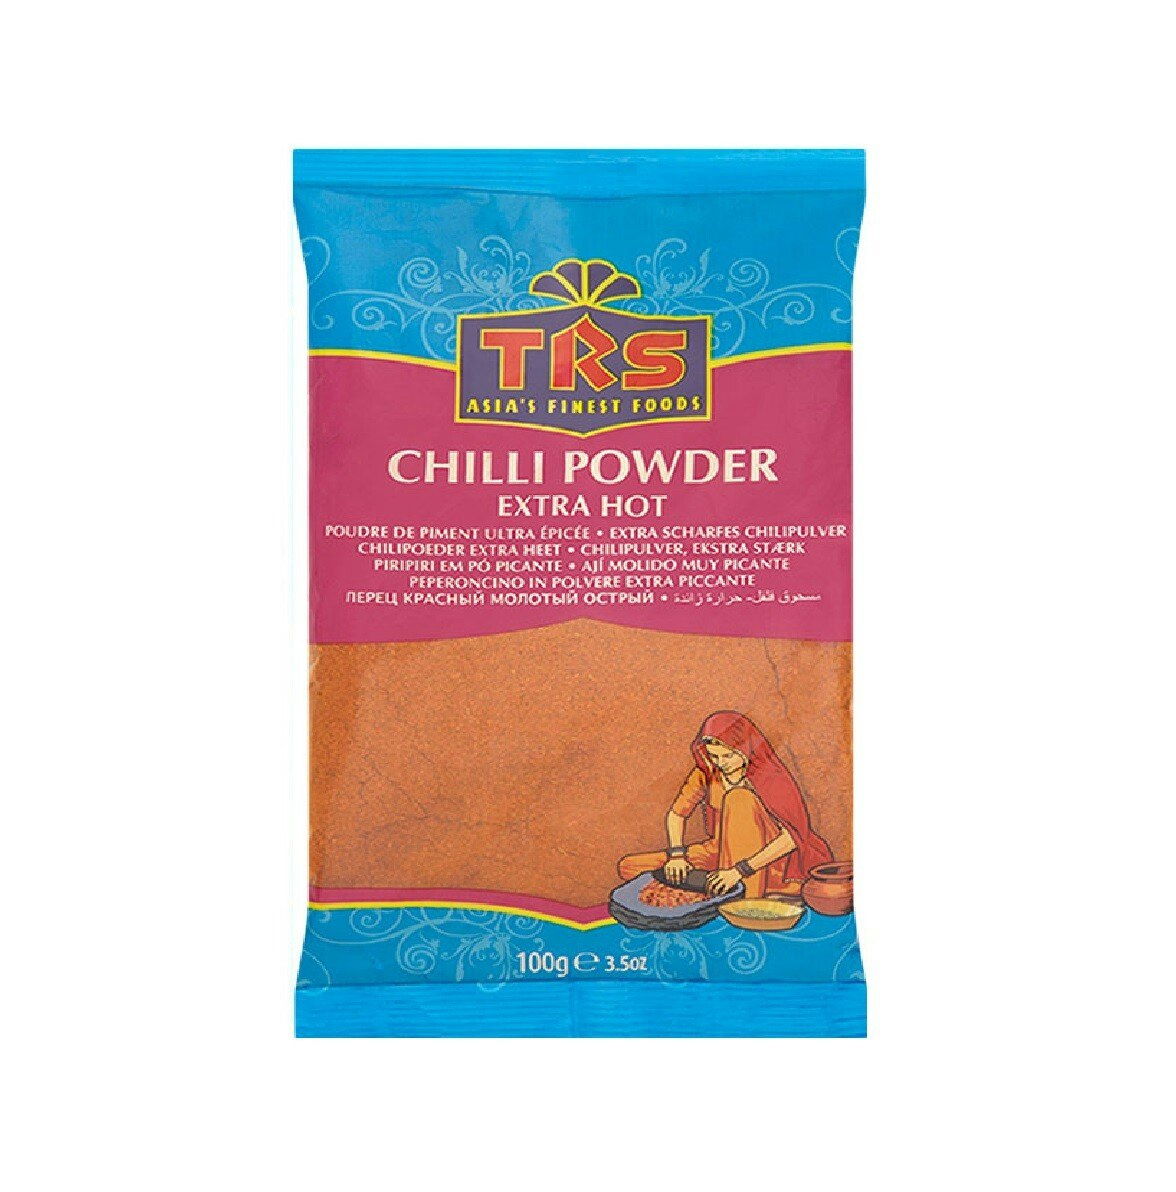 Chilli Powder Extra Hot (TRS) 100g, 400g